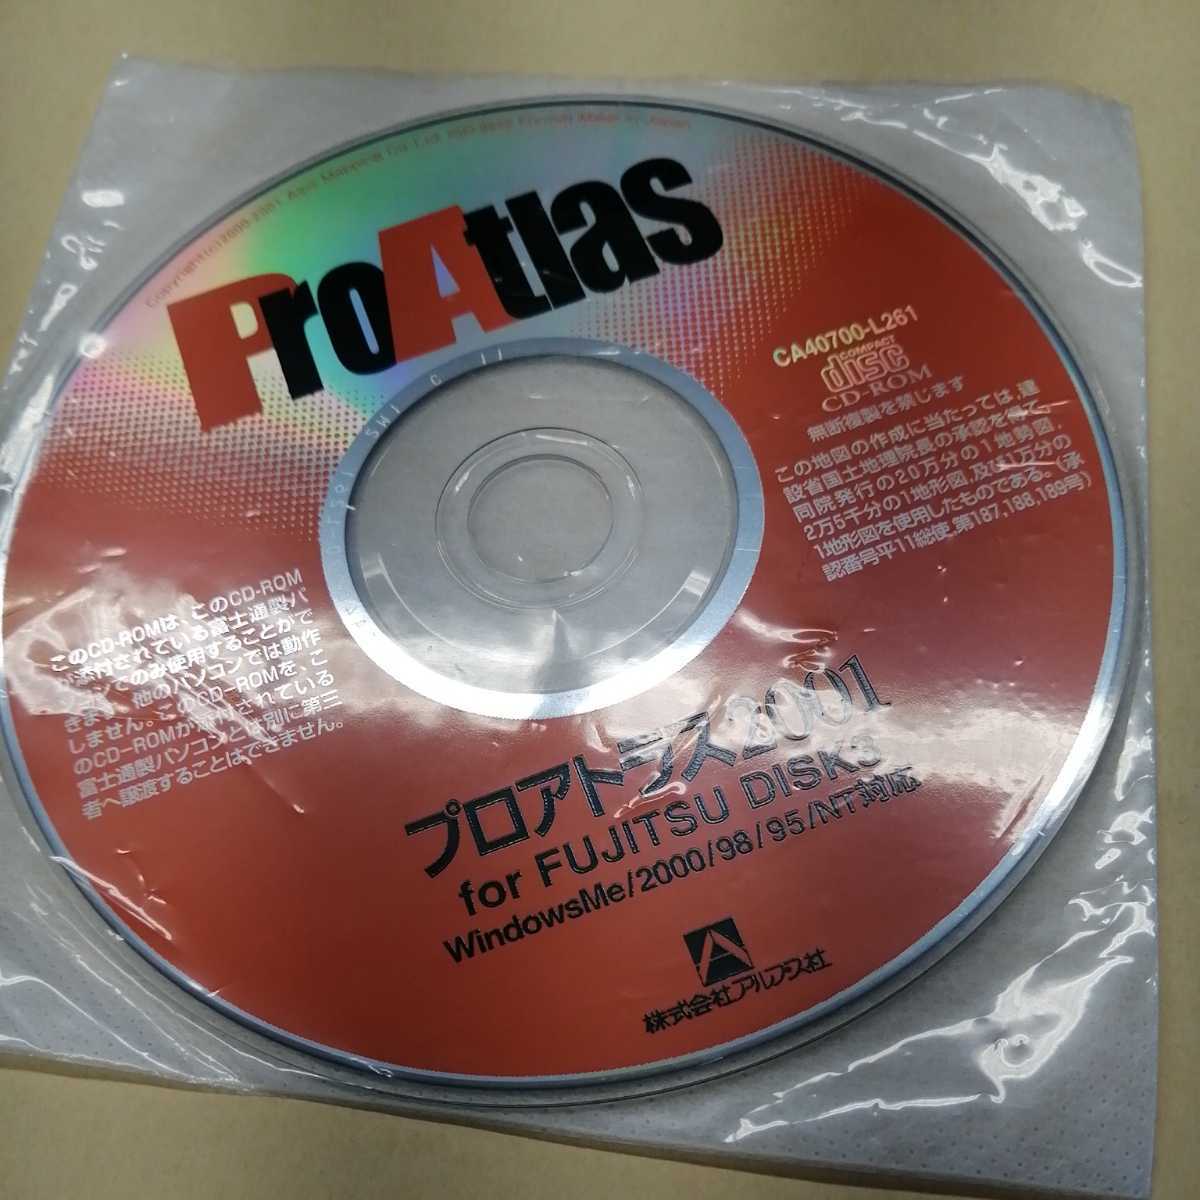  Pro Atlas 2001 for FUJITSU DISK1,2,3 3 шт. комплект 